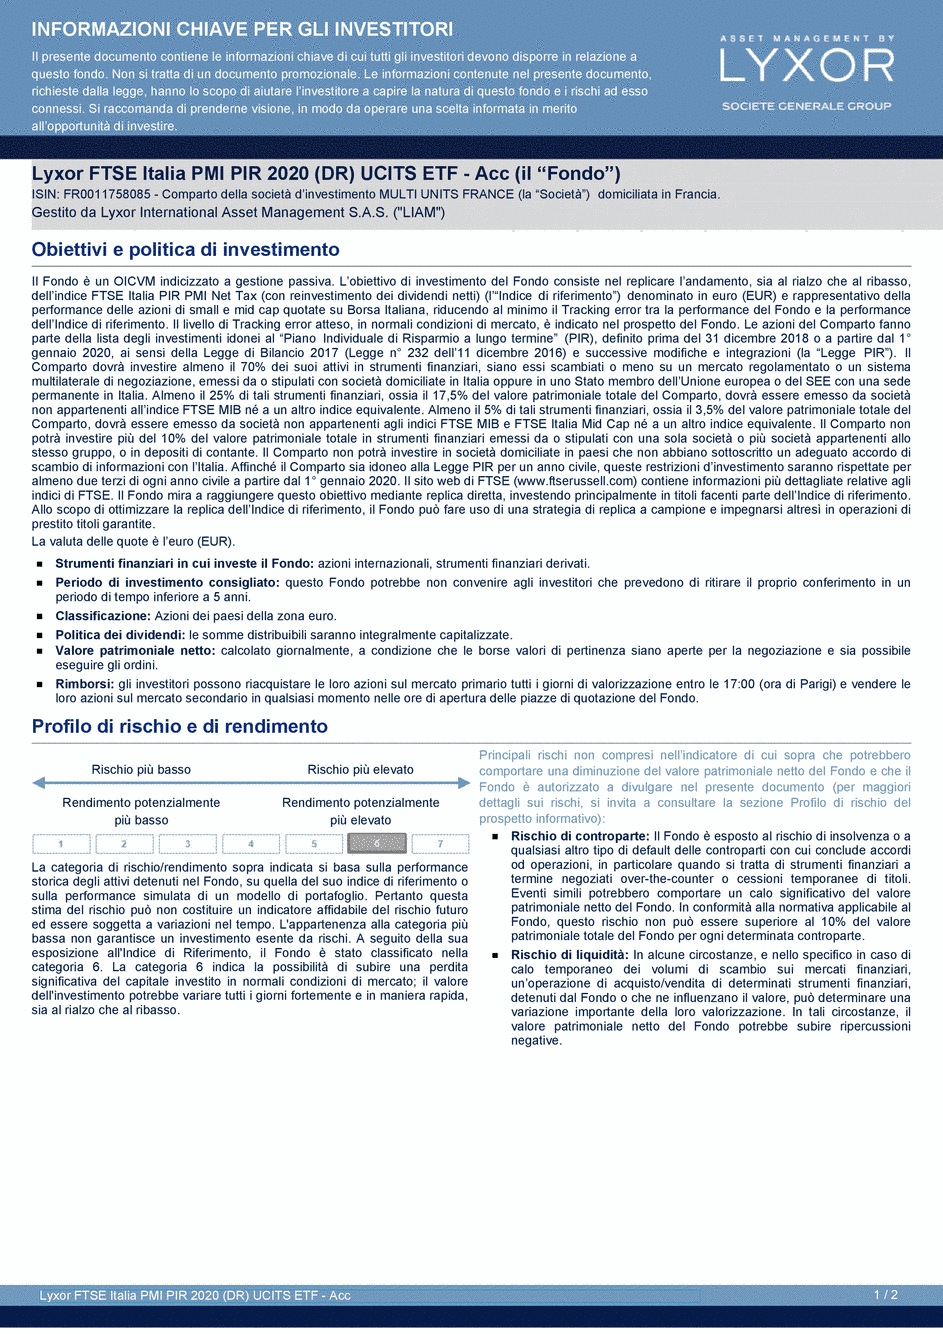 DICI Lyxor FTSE Italia PMI PIR 2020 (DR) UCITS ETF - Acc - 21/07/2020 - Italien